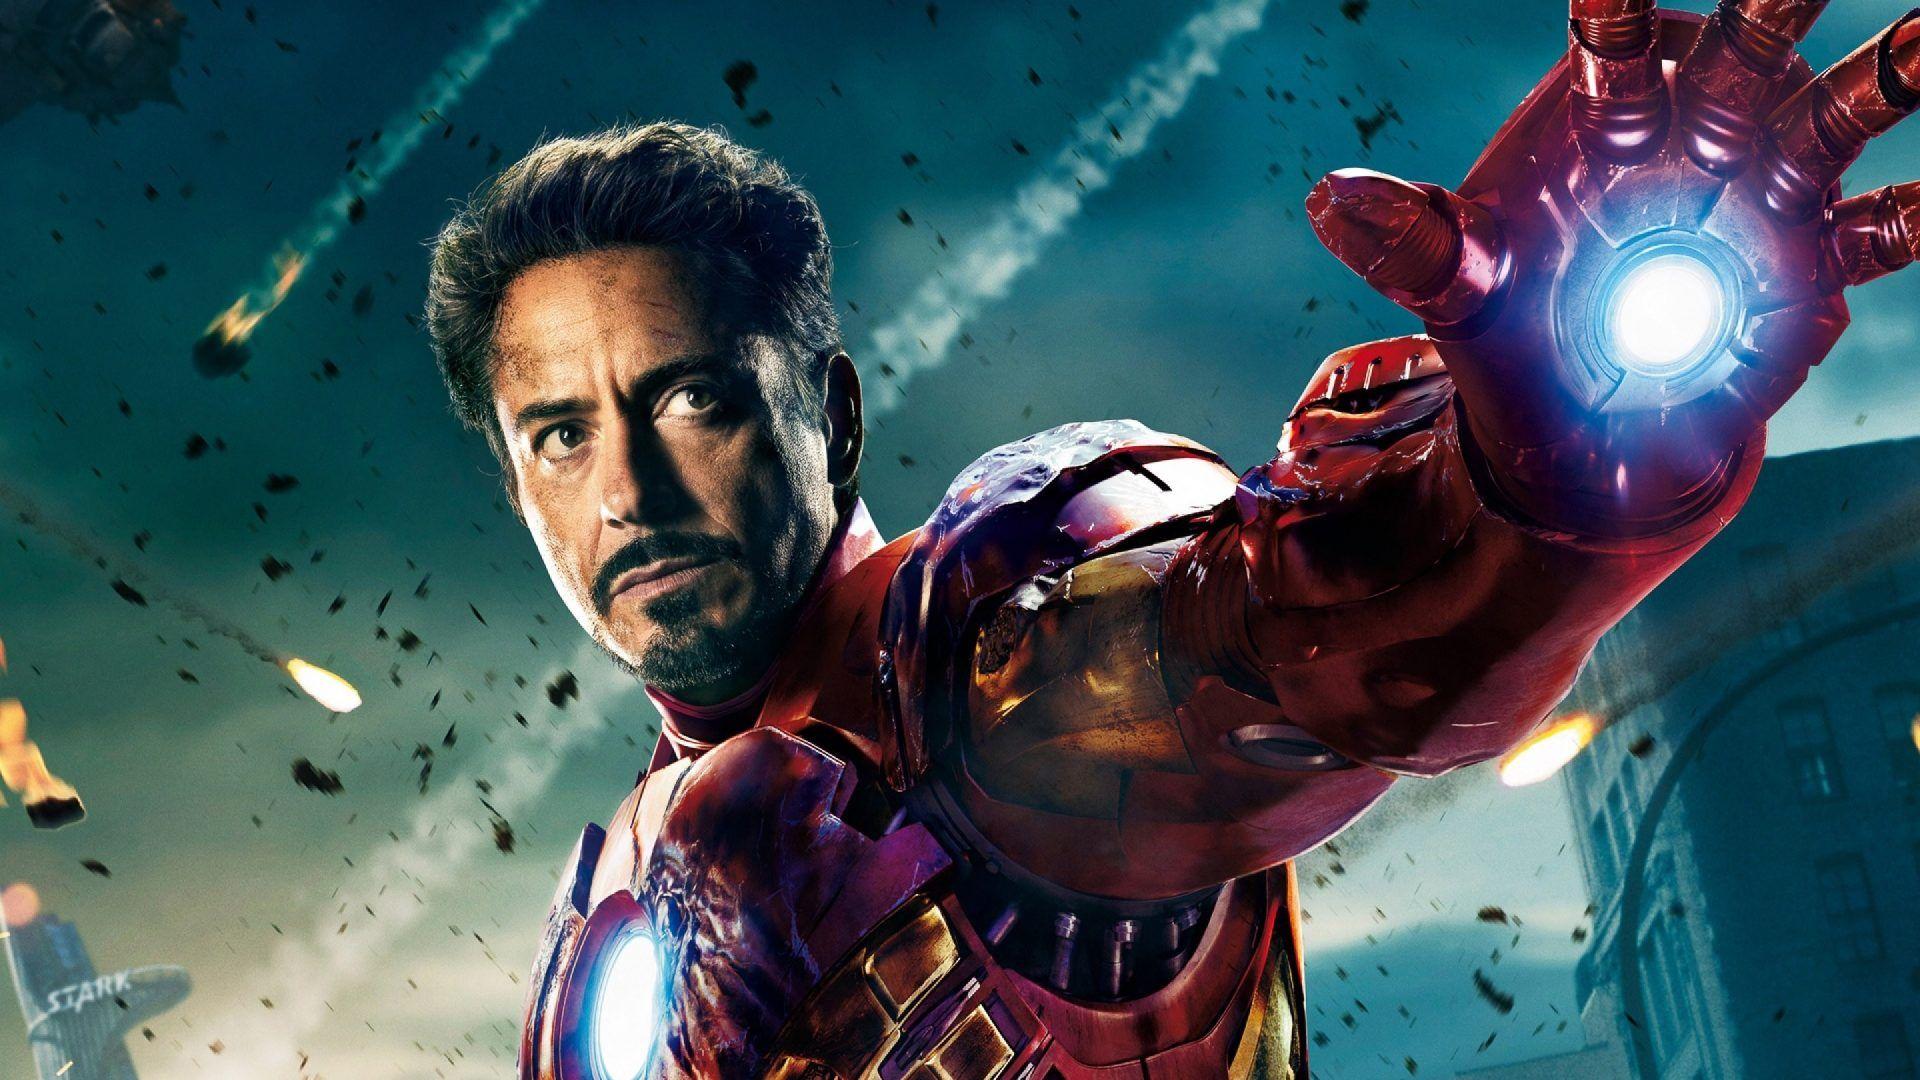 Avengers Tony Stark Iron Man Movie HD Wallpaper 2880x1800